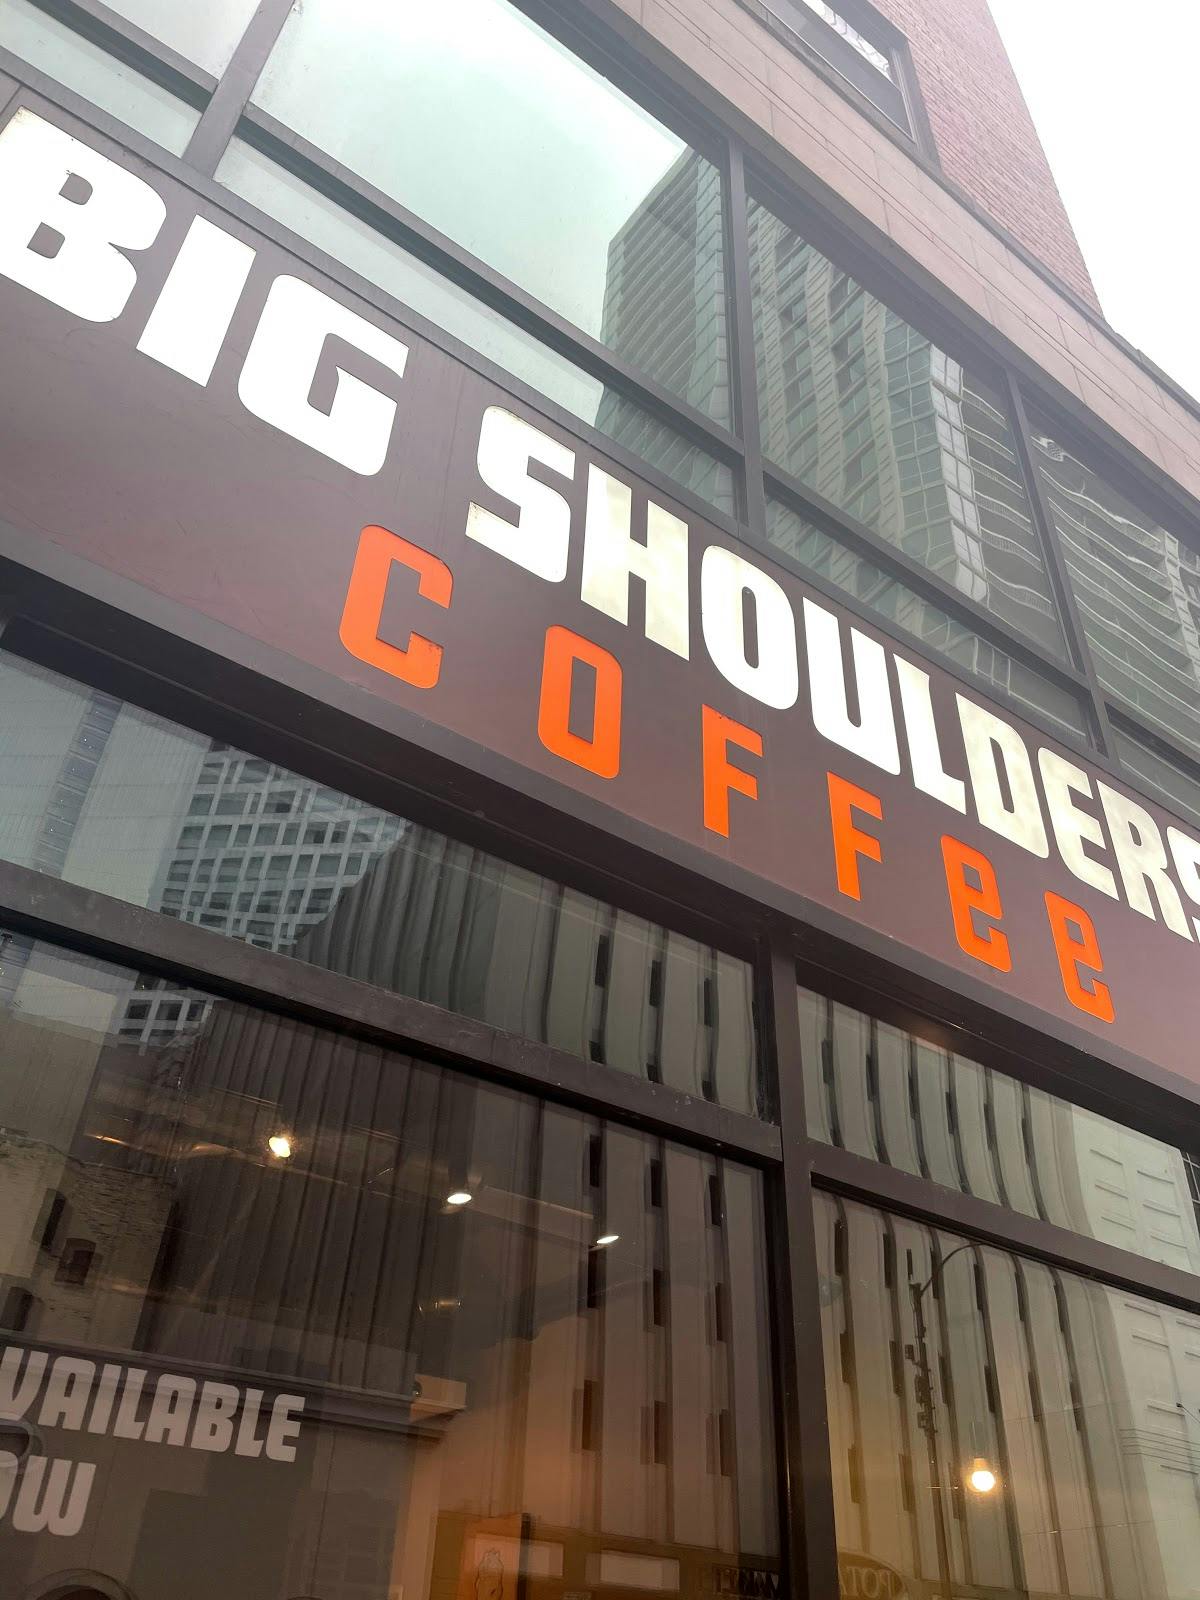 Image - Big Shoulders Coffee